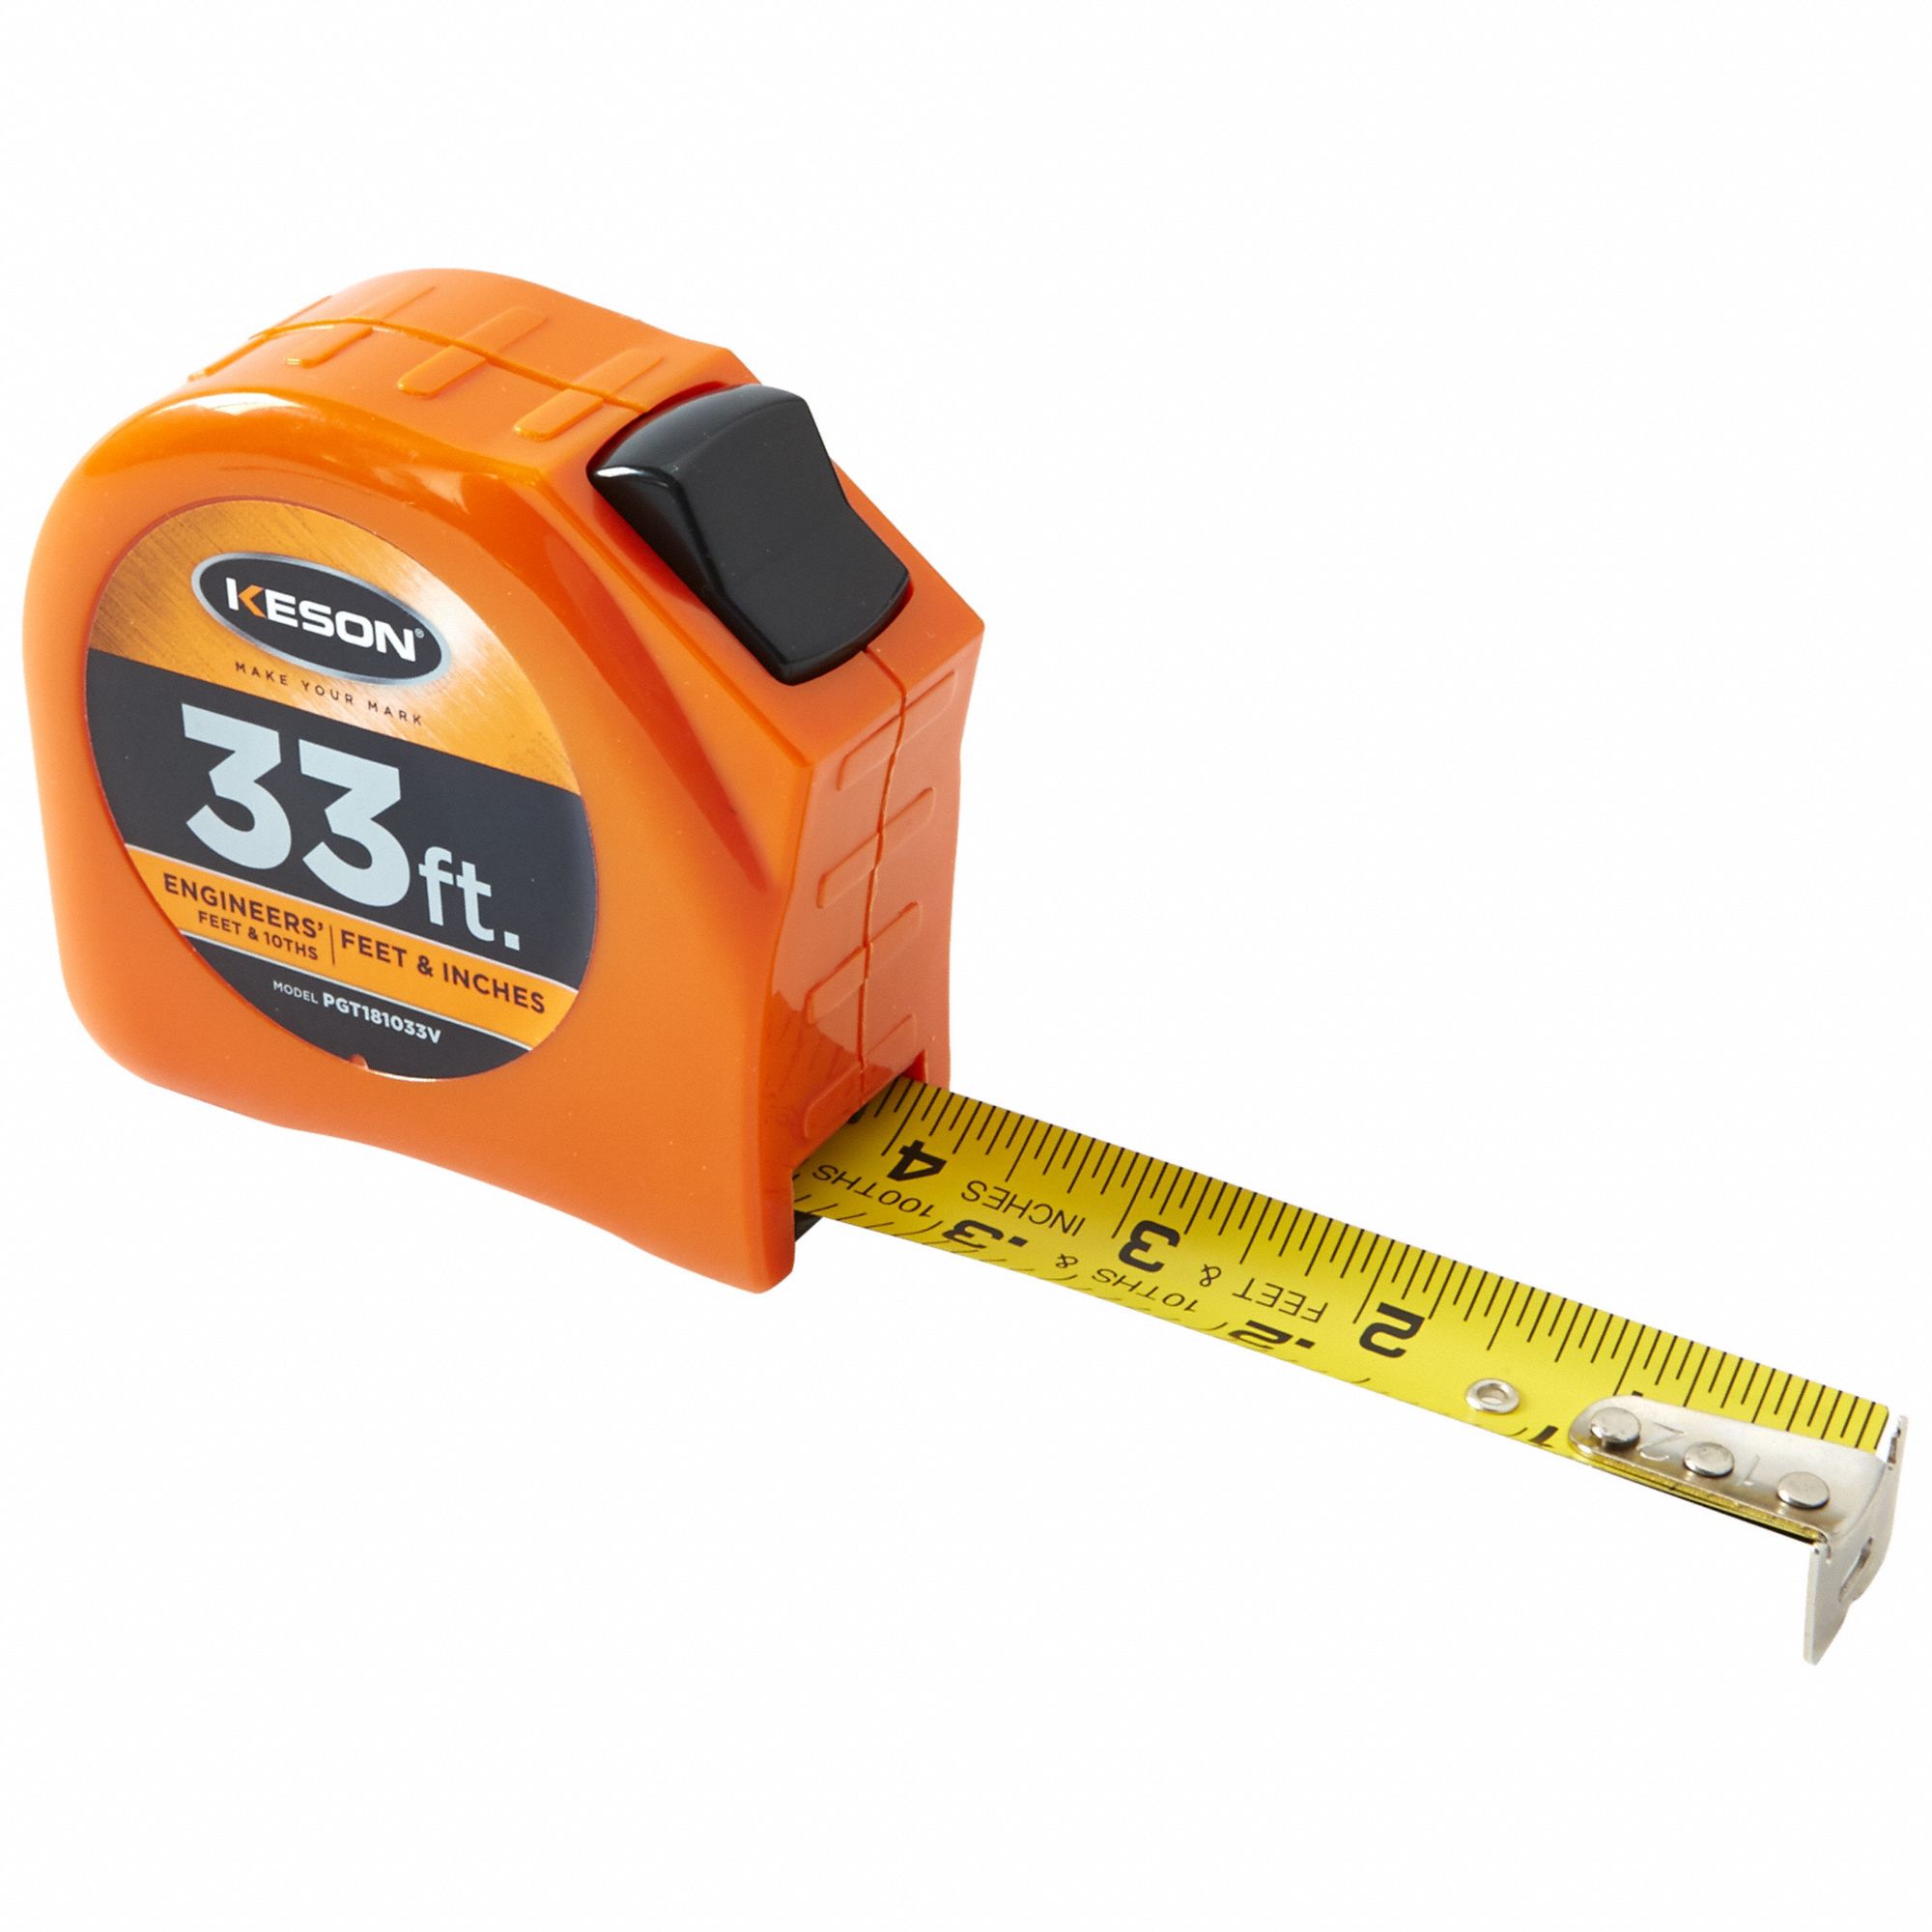 33 ft. Tape Measure, 1 Blade, Orange Keson PGT181033V